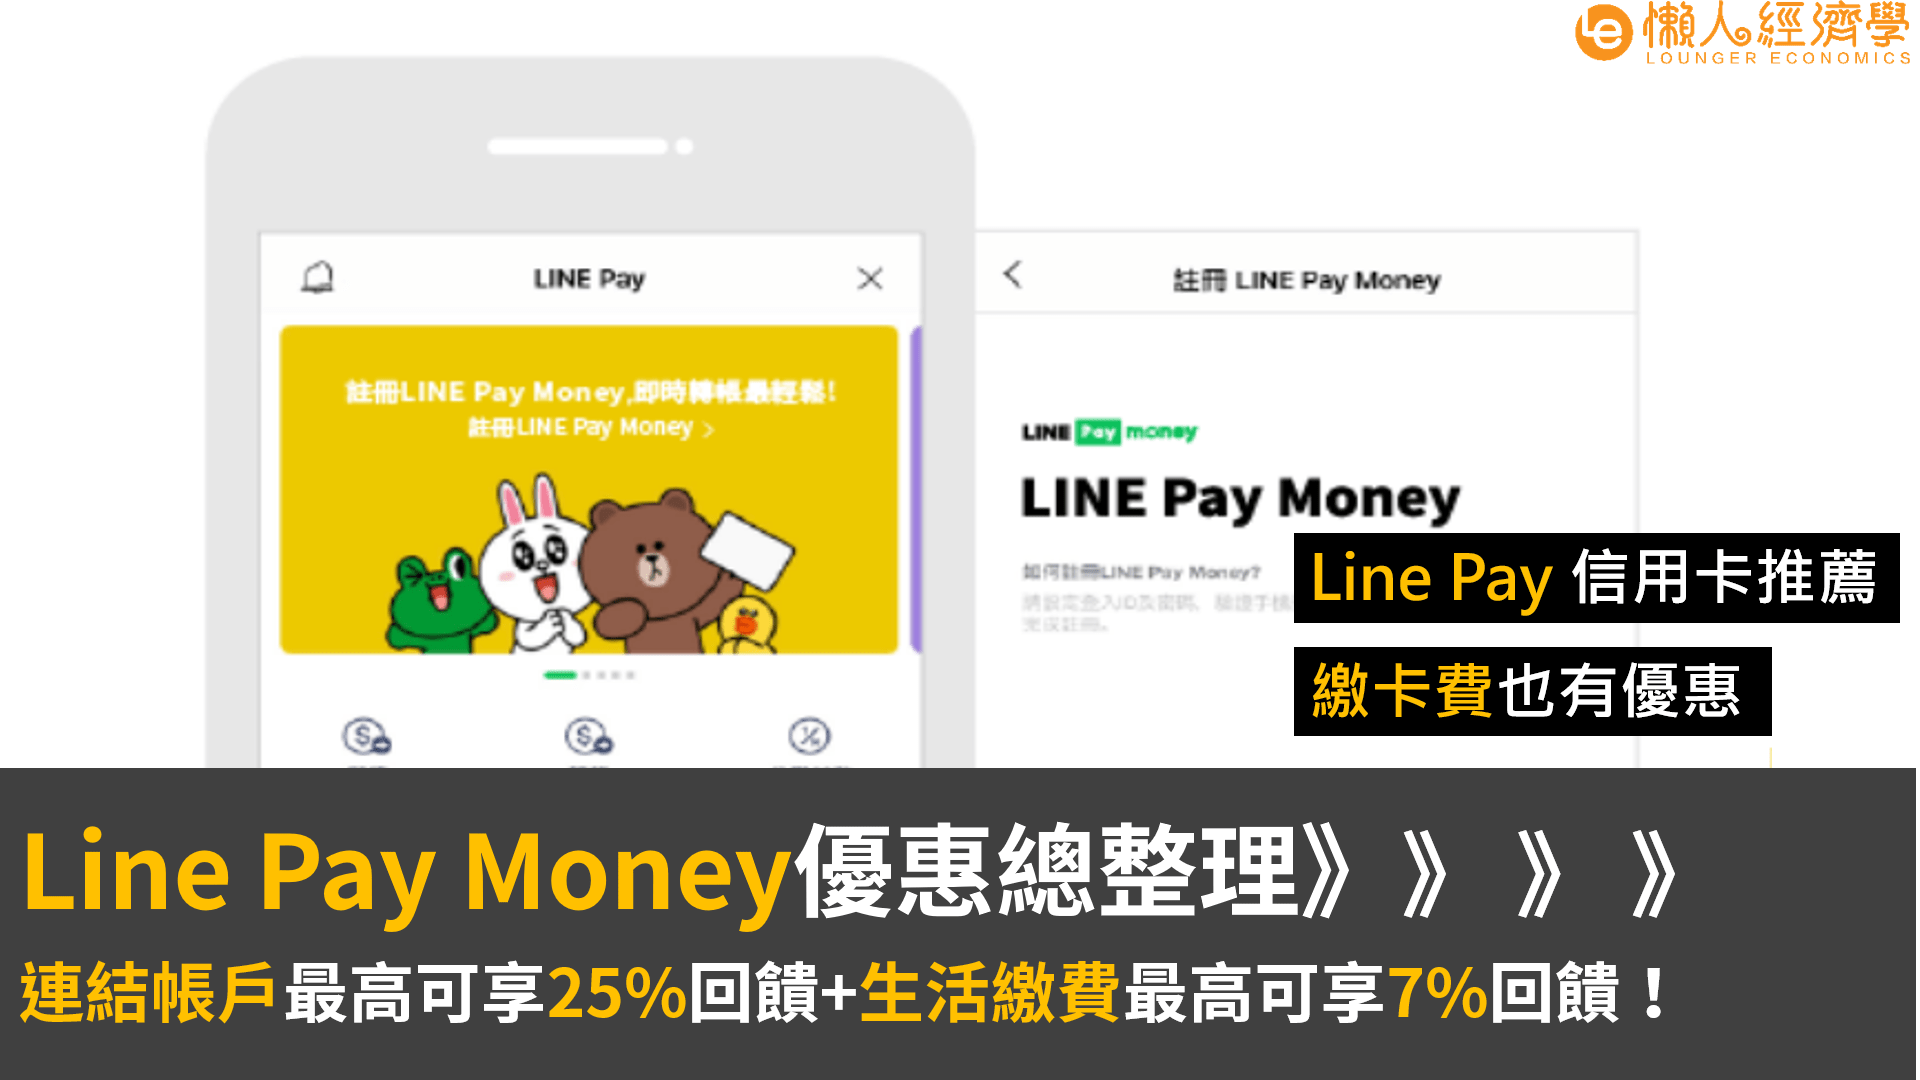 Line Pay Money回饋總整理：連結帳戶最高可享25%回饋、生活繳費最高可享7%回饋，繳卡費也可享回饋！